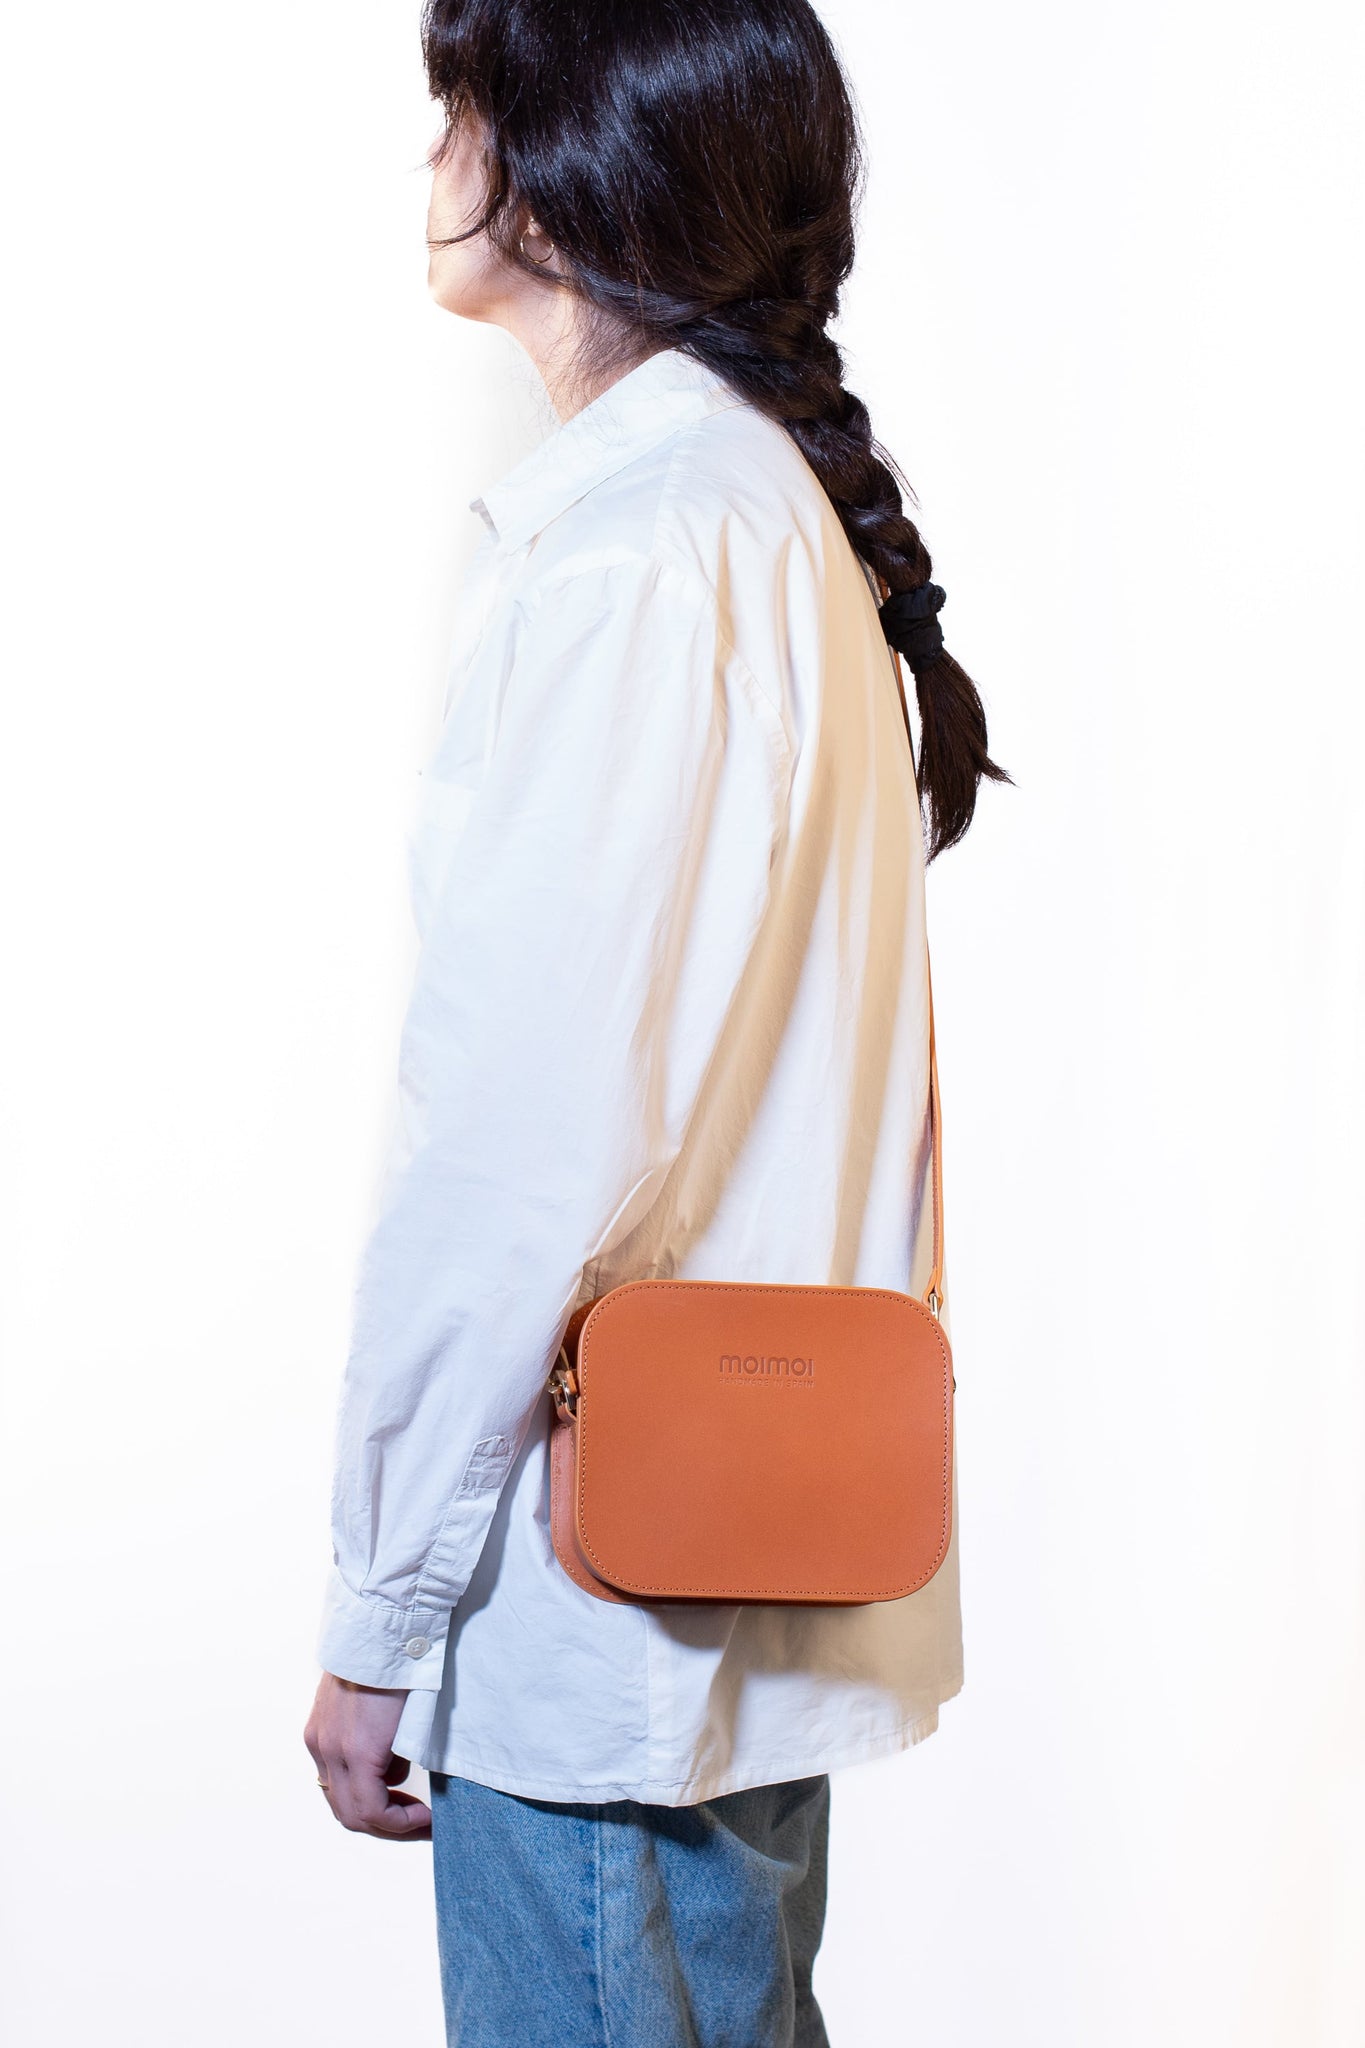 SOFIA small crossbody bag in light brown – MOIMOI accessories